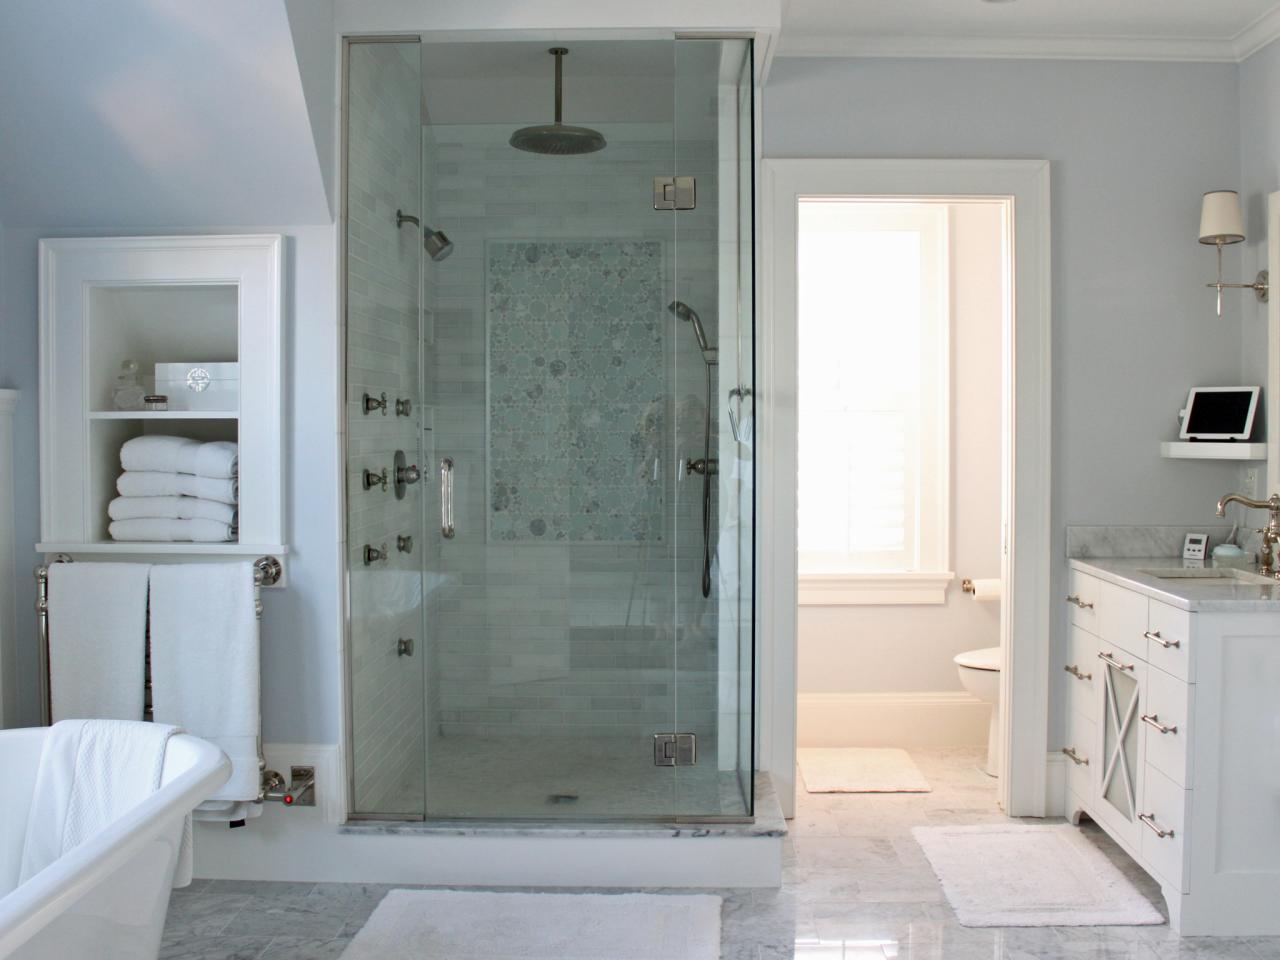 cabine douche baignoire salle de bains original molly frey marbre blanc neutre style moderne